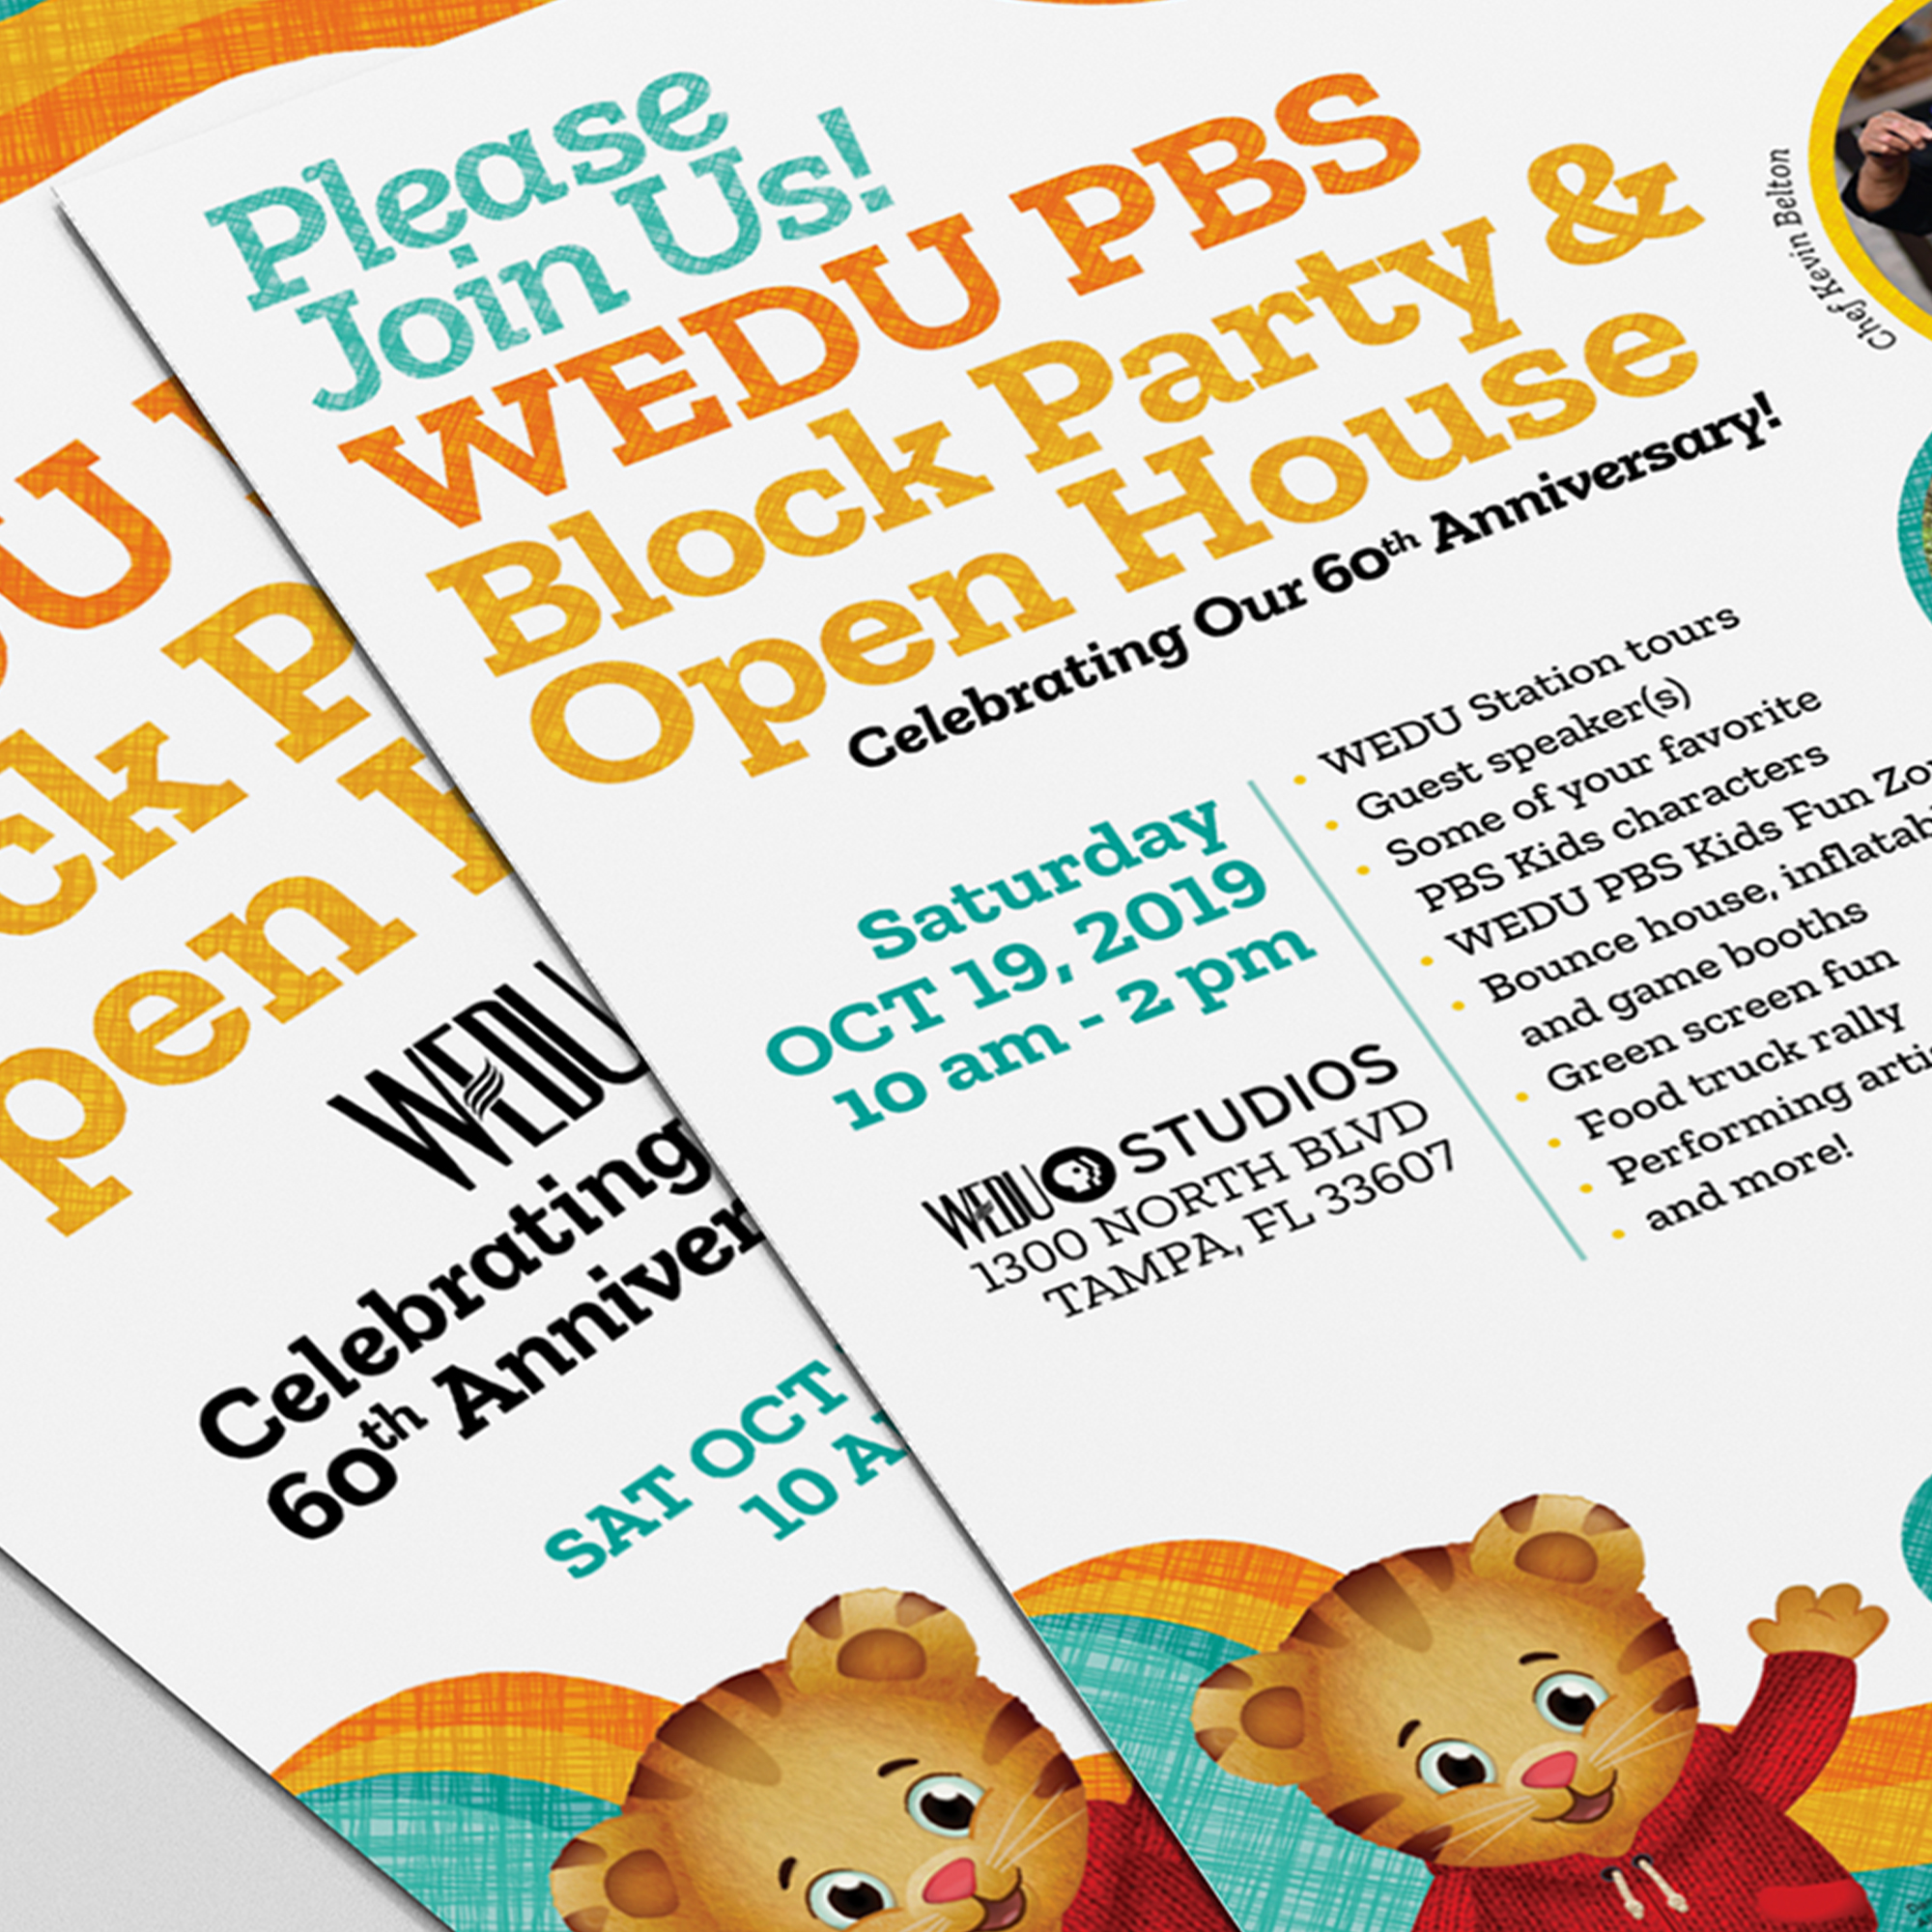 WEDU PBS Block Party & Open House 2019